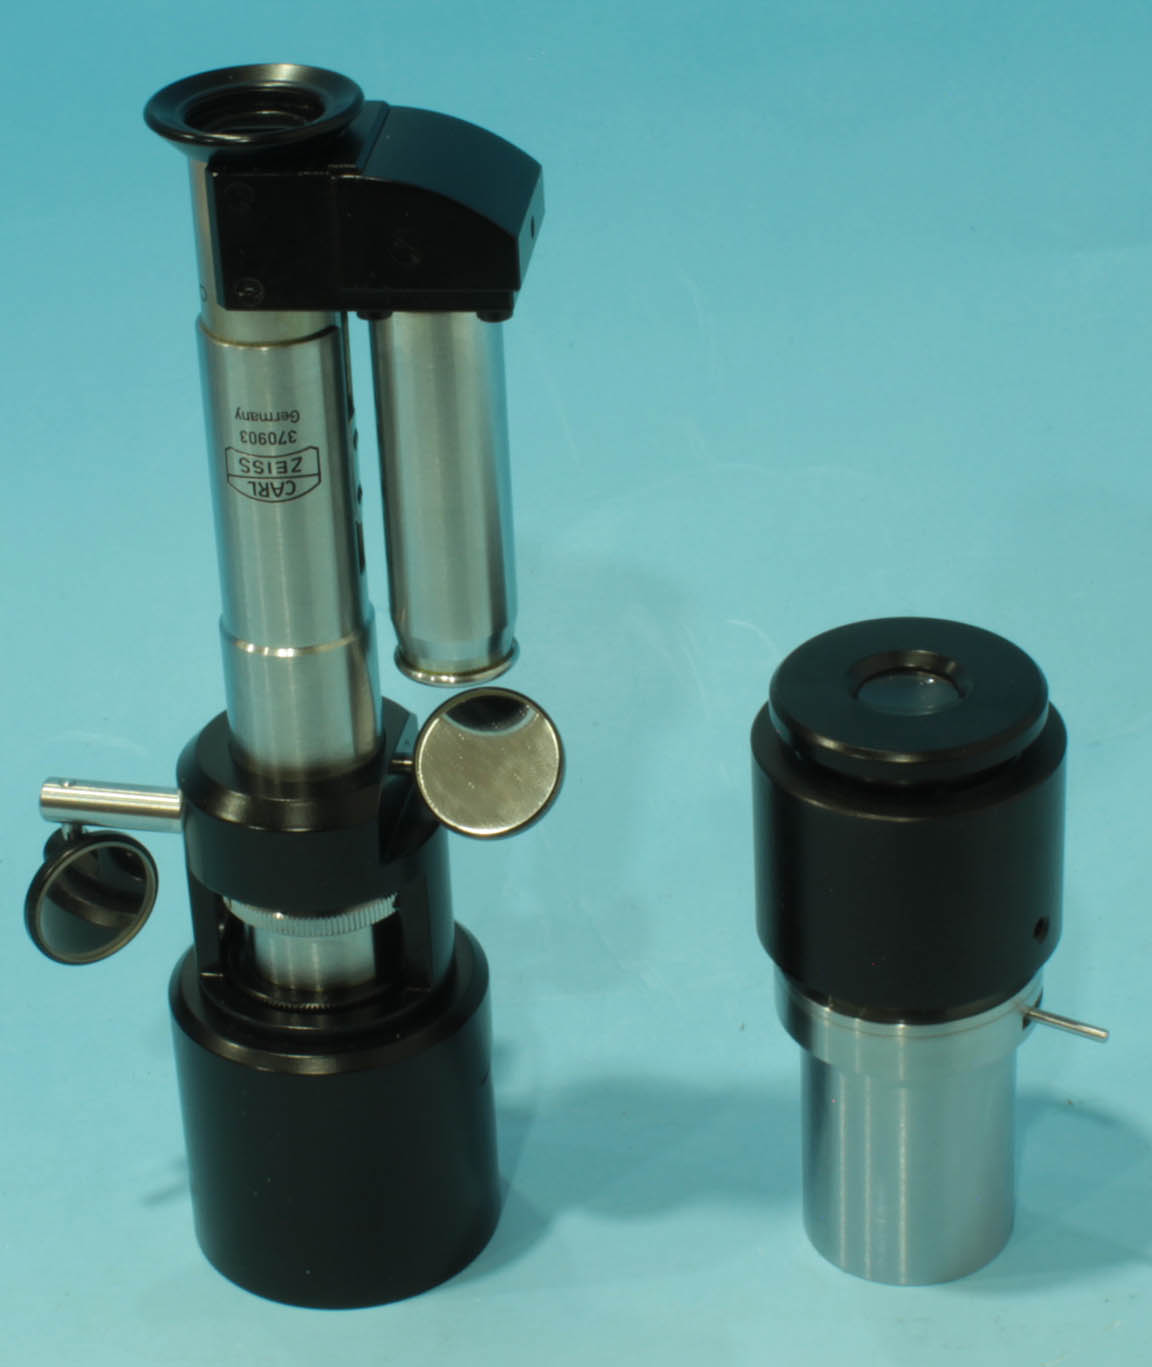 microspectroscope